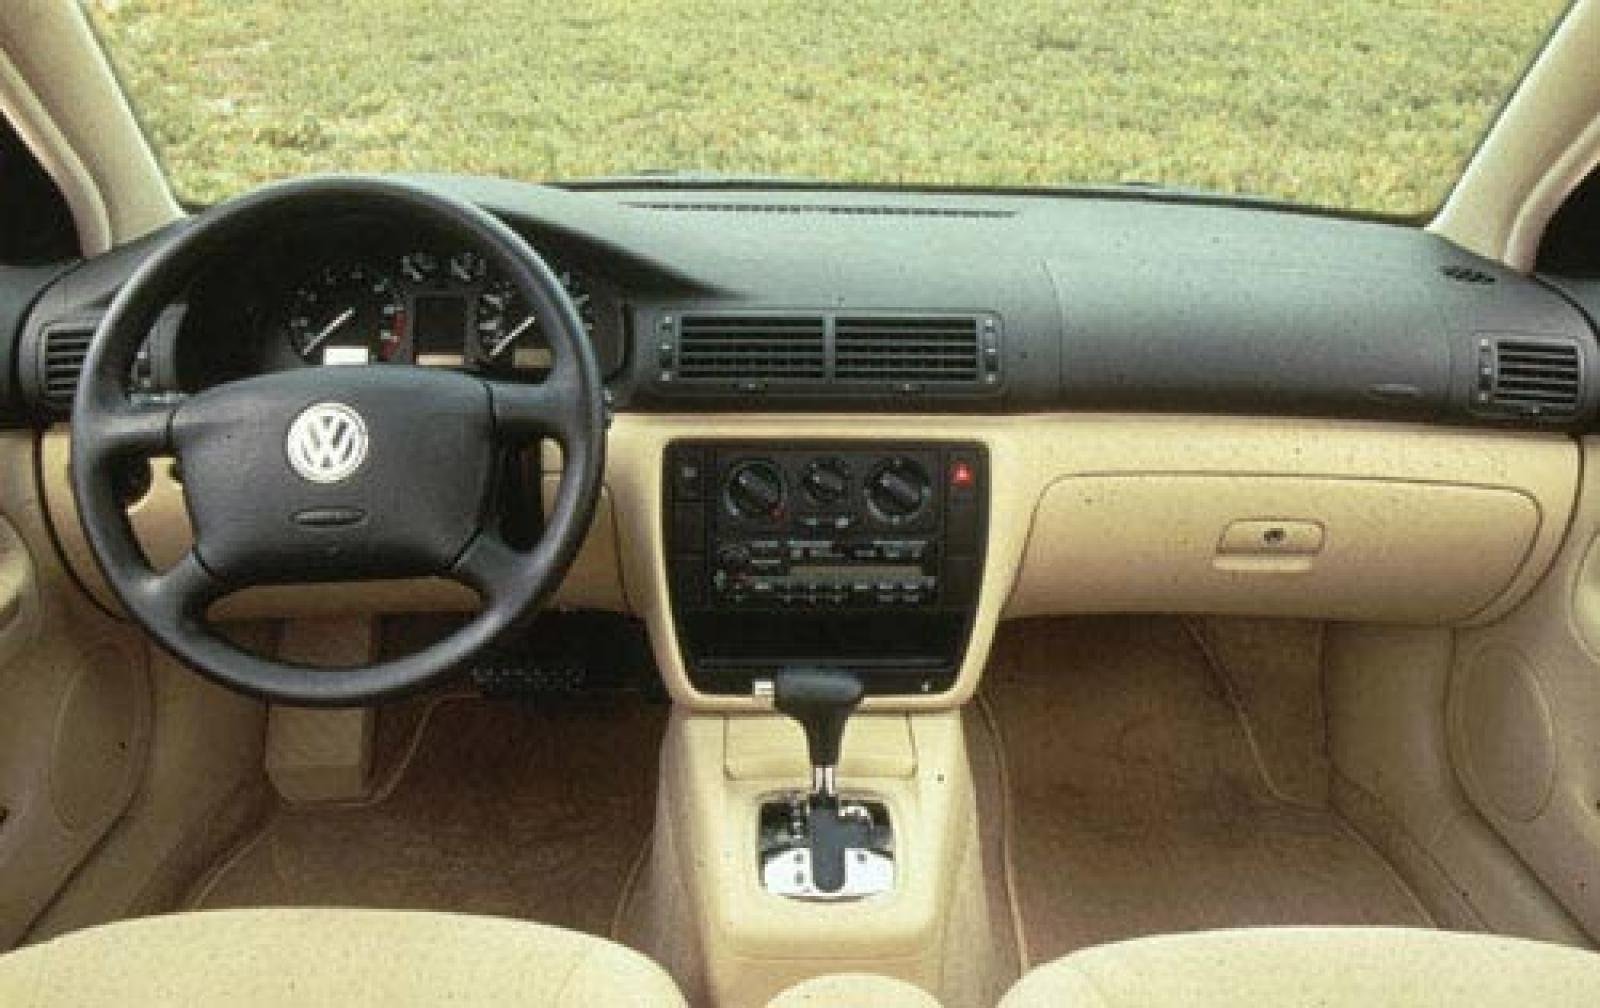 Пассат б5 1999 год. Volkswagen Passat b5 седан салон. Фольксваген б5 1998. Фольксваген Пассат 1998 салон. Volkswagen Passat b5 1998 салон.